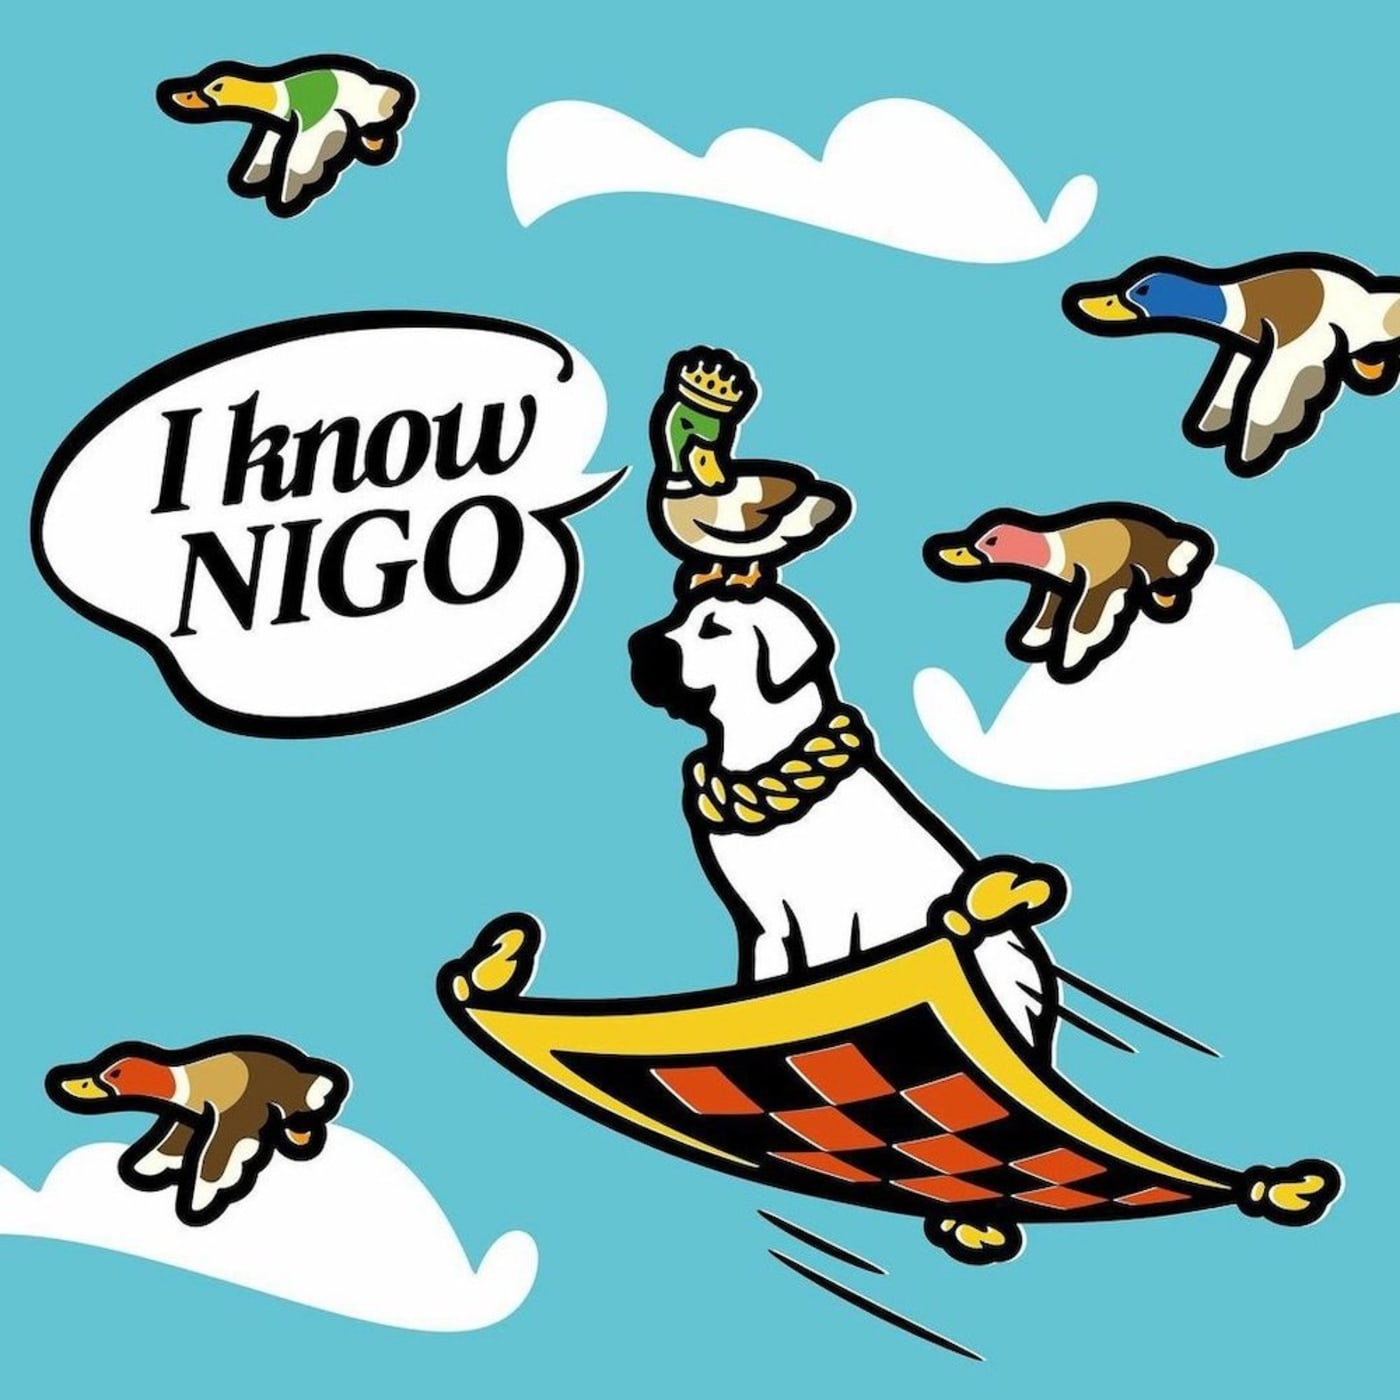 Nigos' I Know Nigo album cover featuring pusha t and others